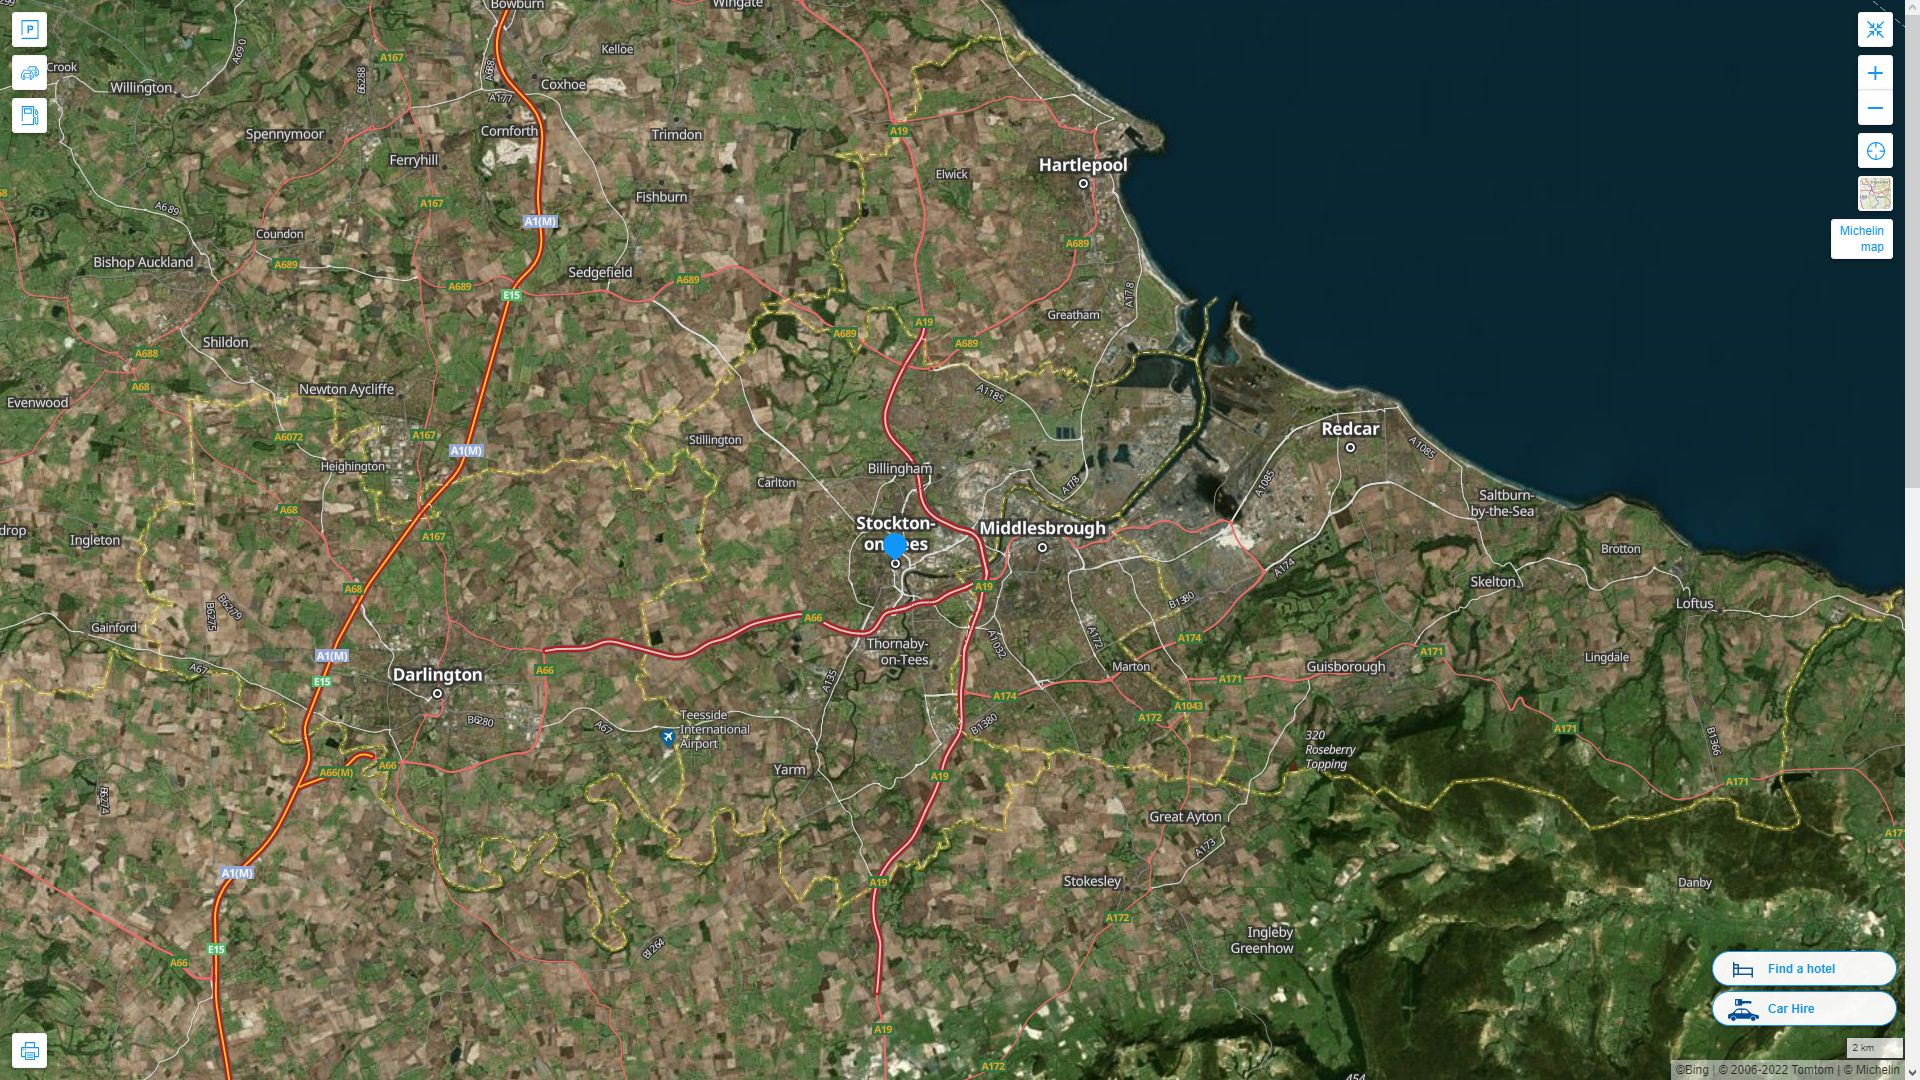 Stockton on Tees Royaume Uni Autoroute et carte routiere avec vue satellite